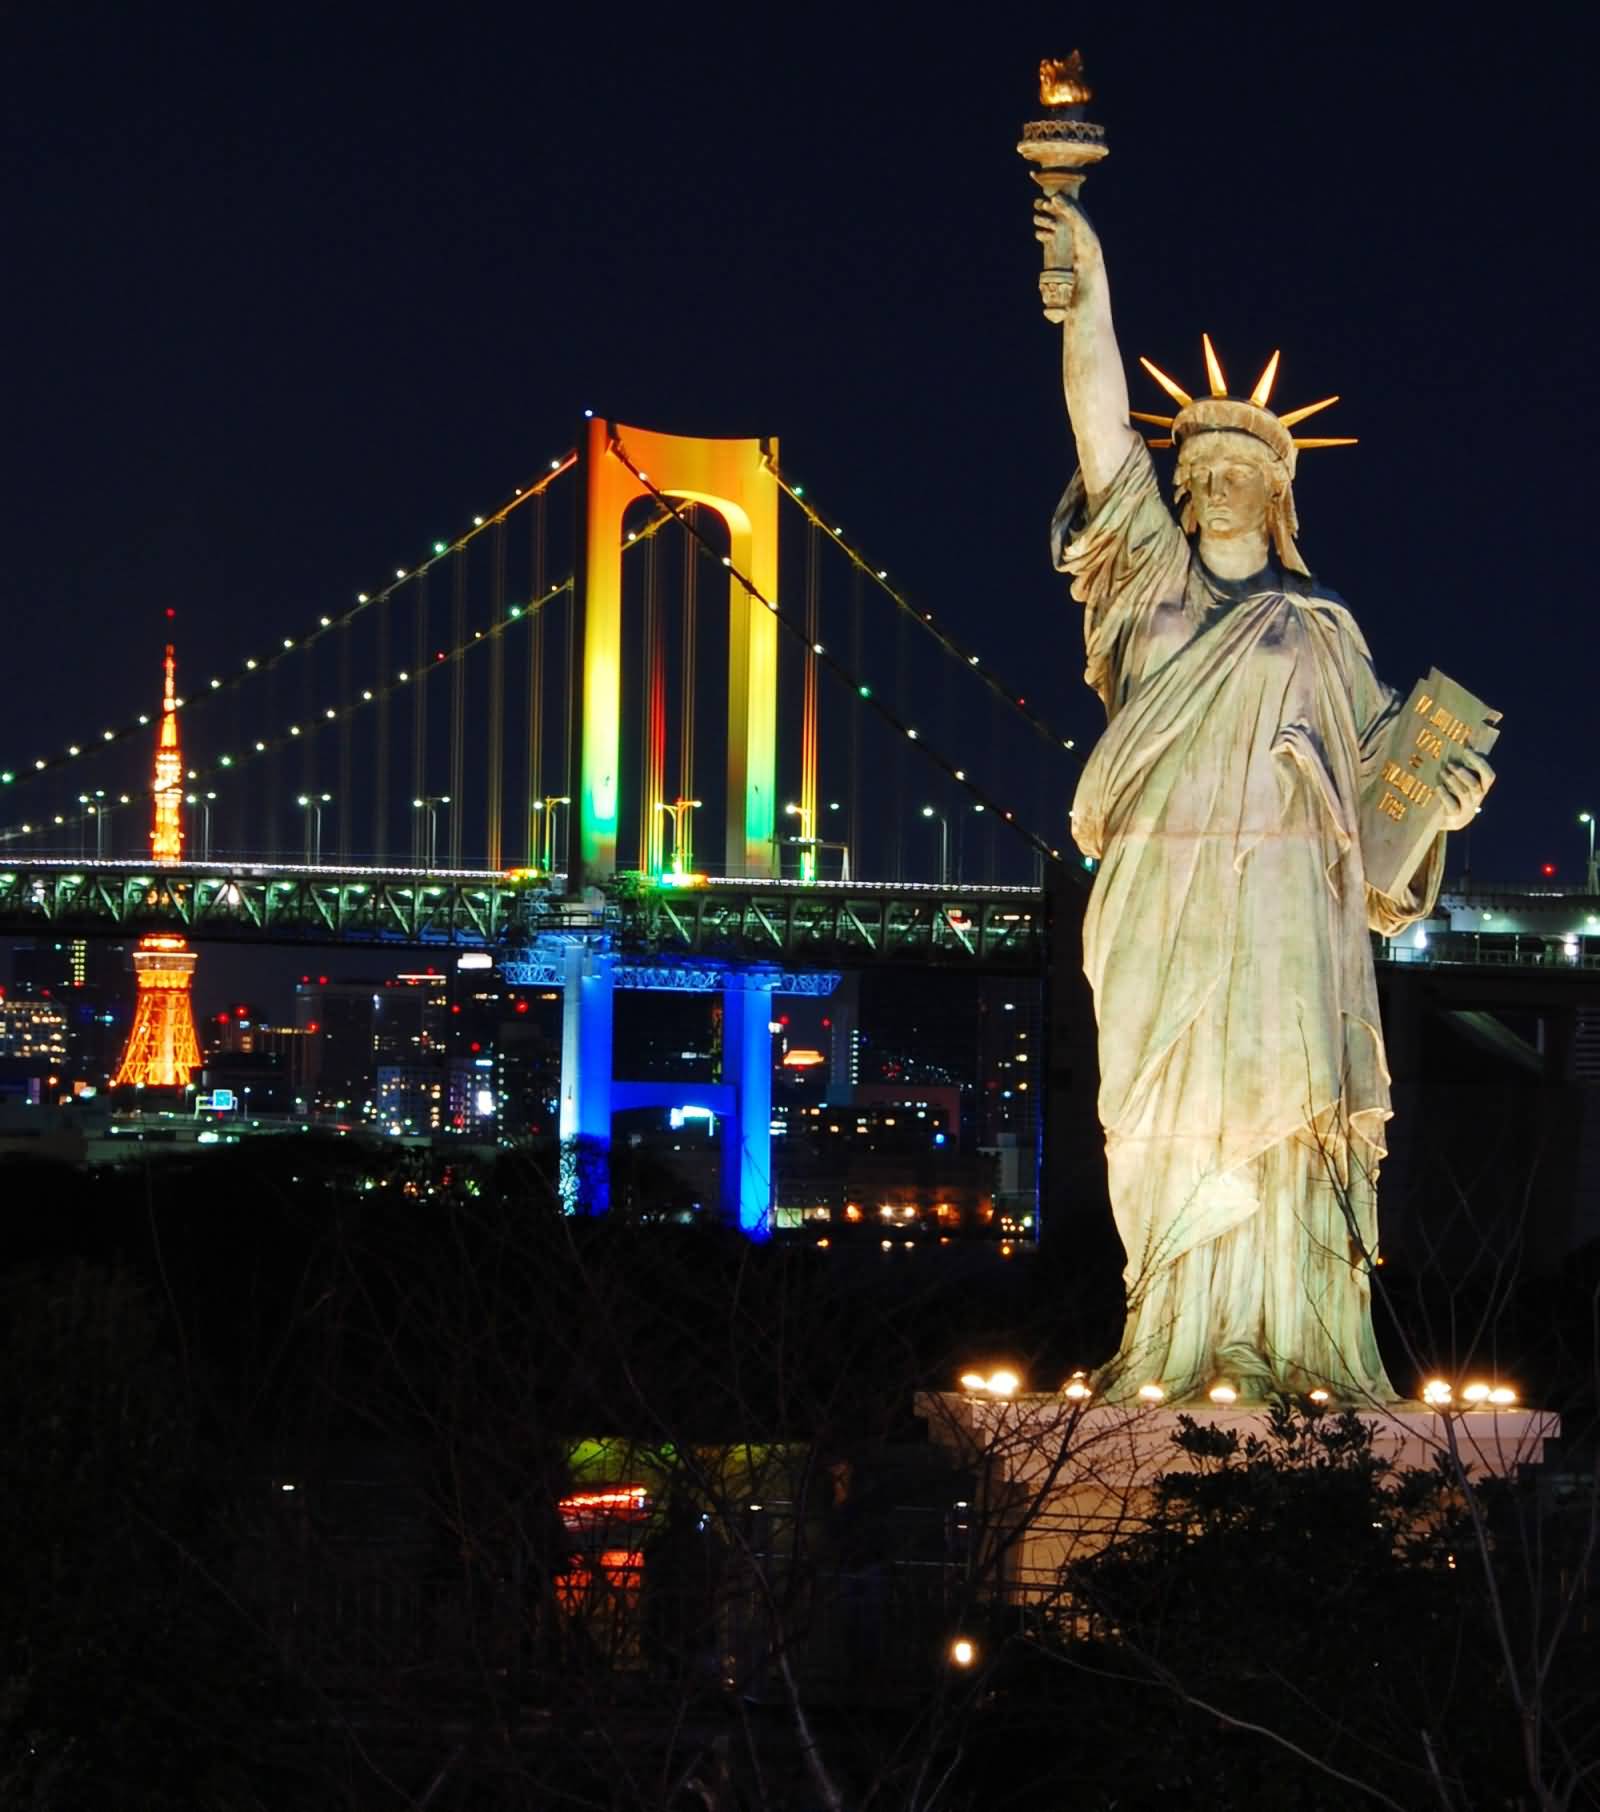 Statue Of Liberty And Rainbow Bridge Lit Up At Night